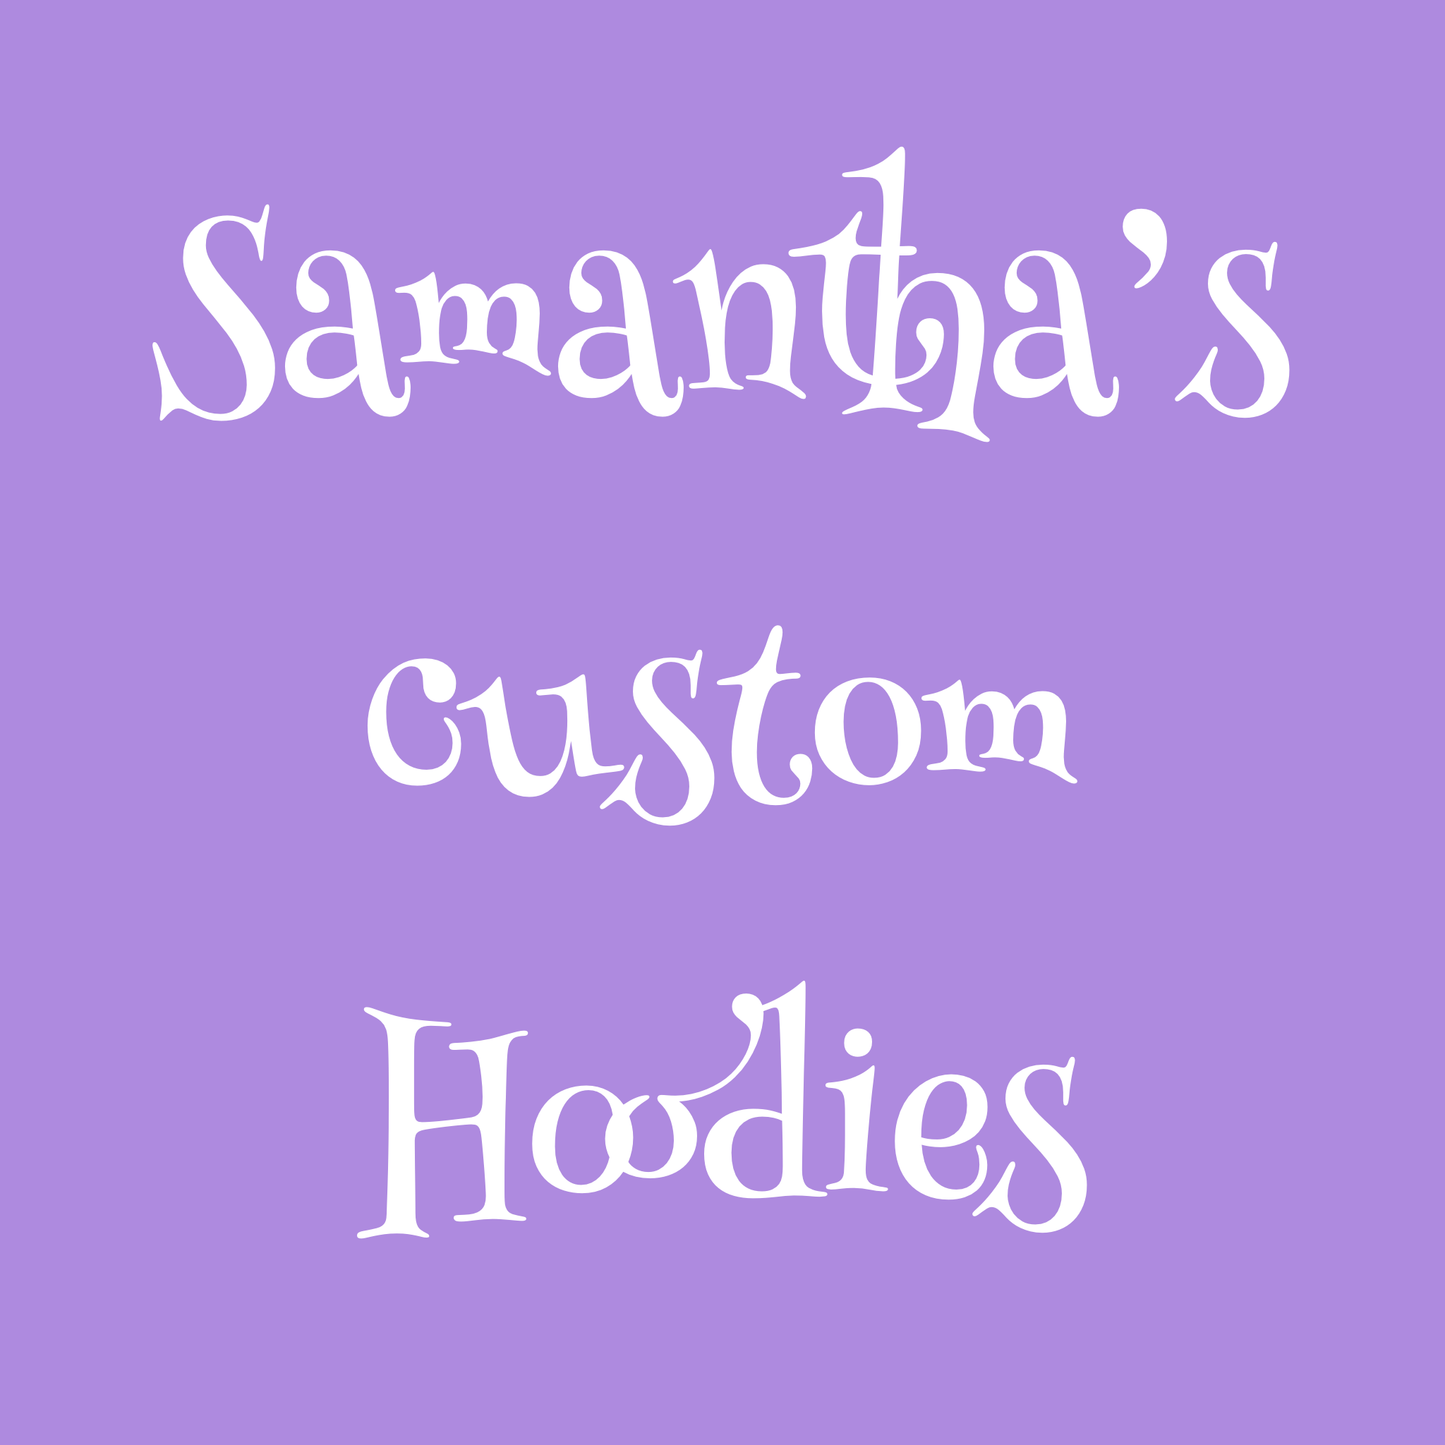 Samantha’s custom hoodies 💖